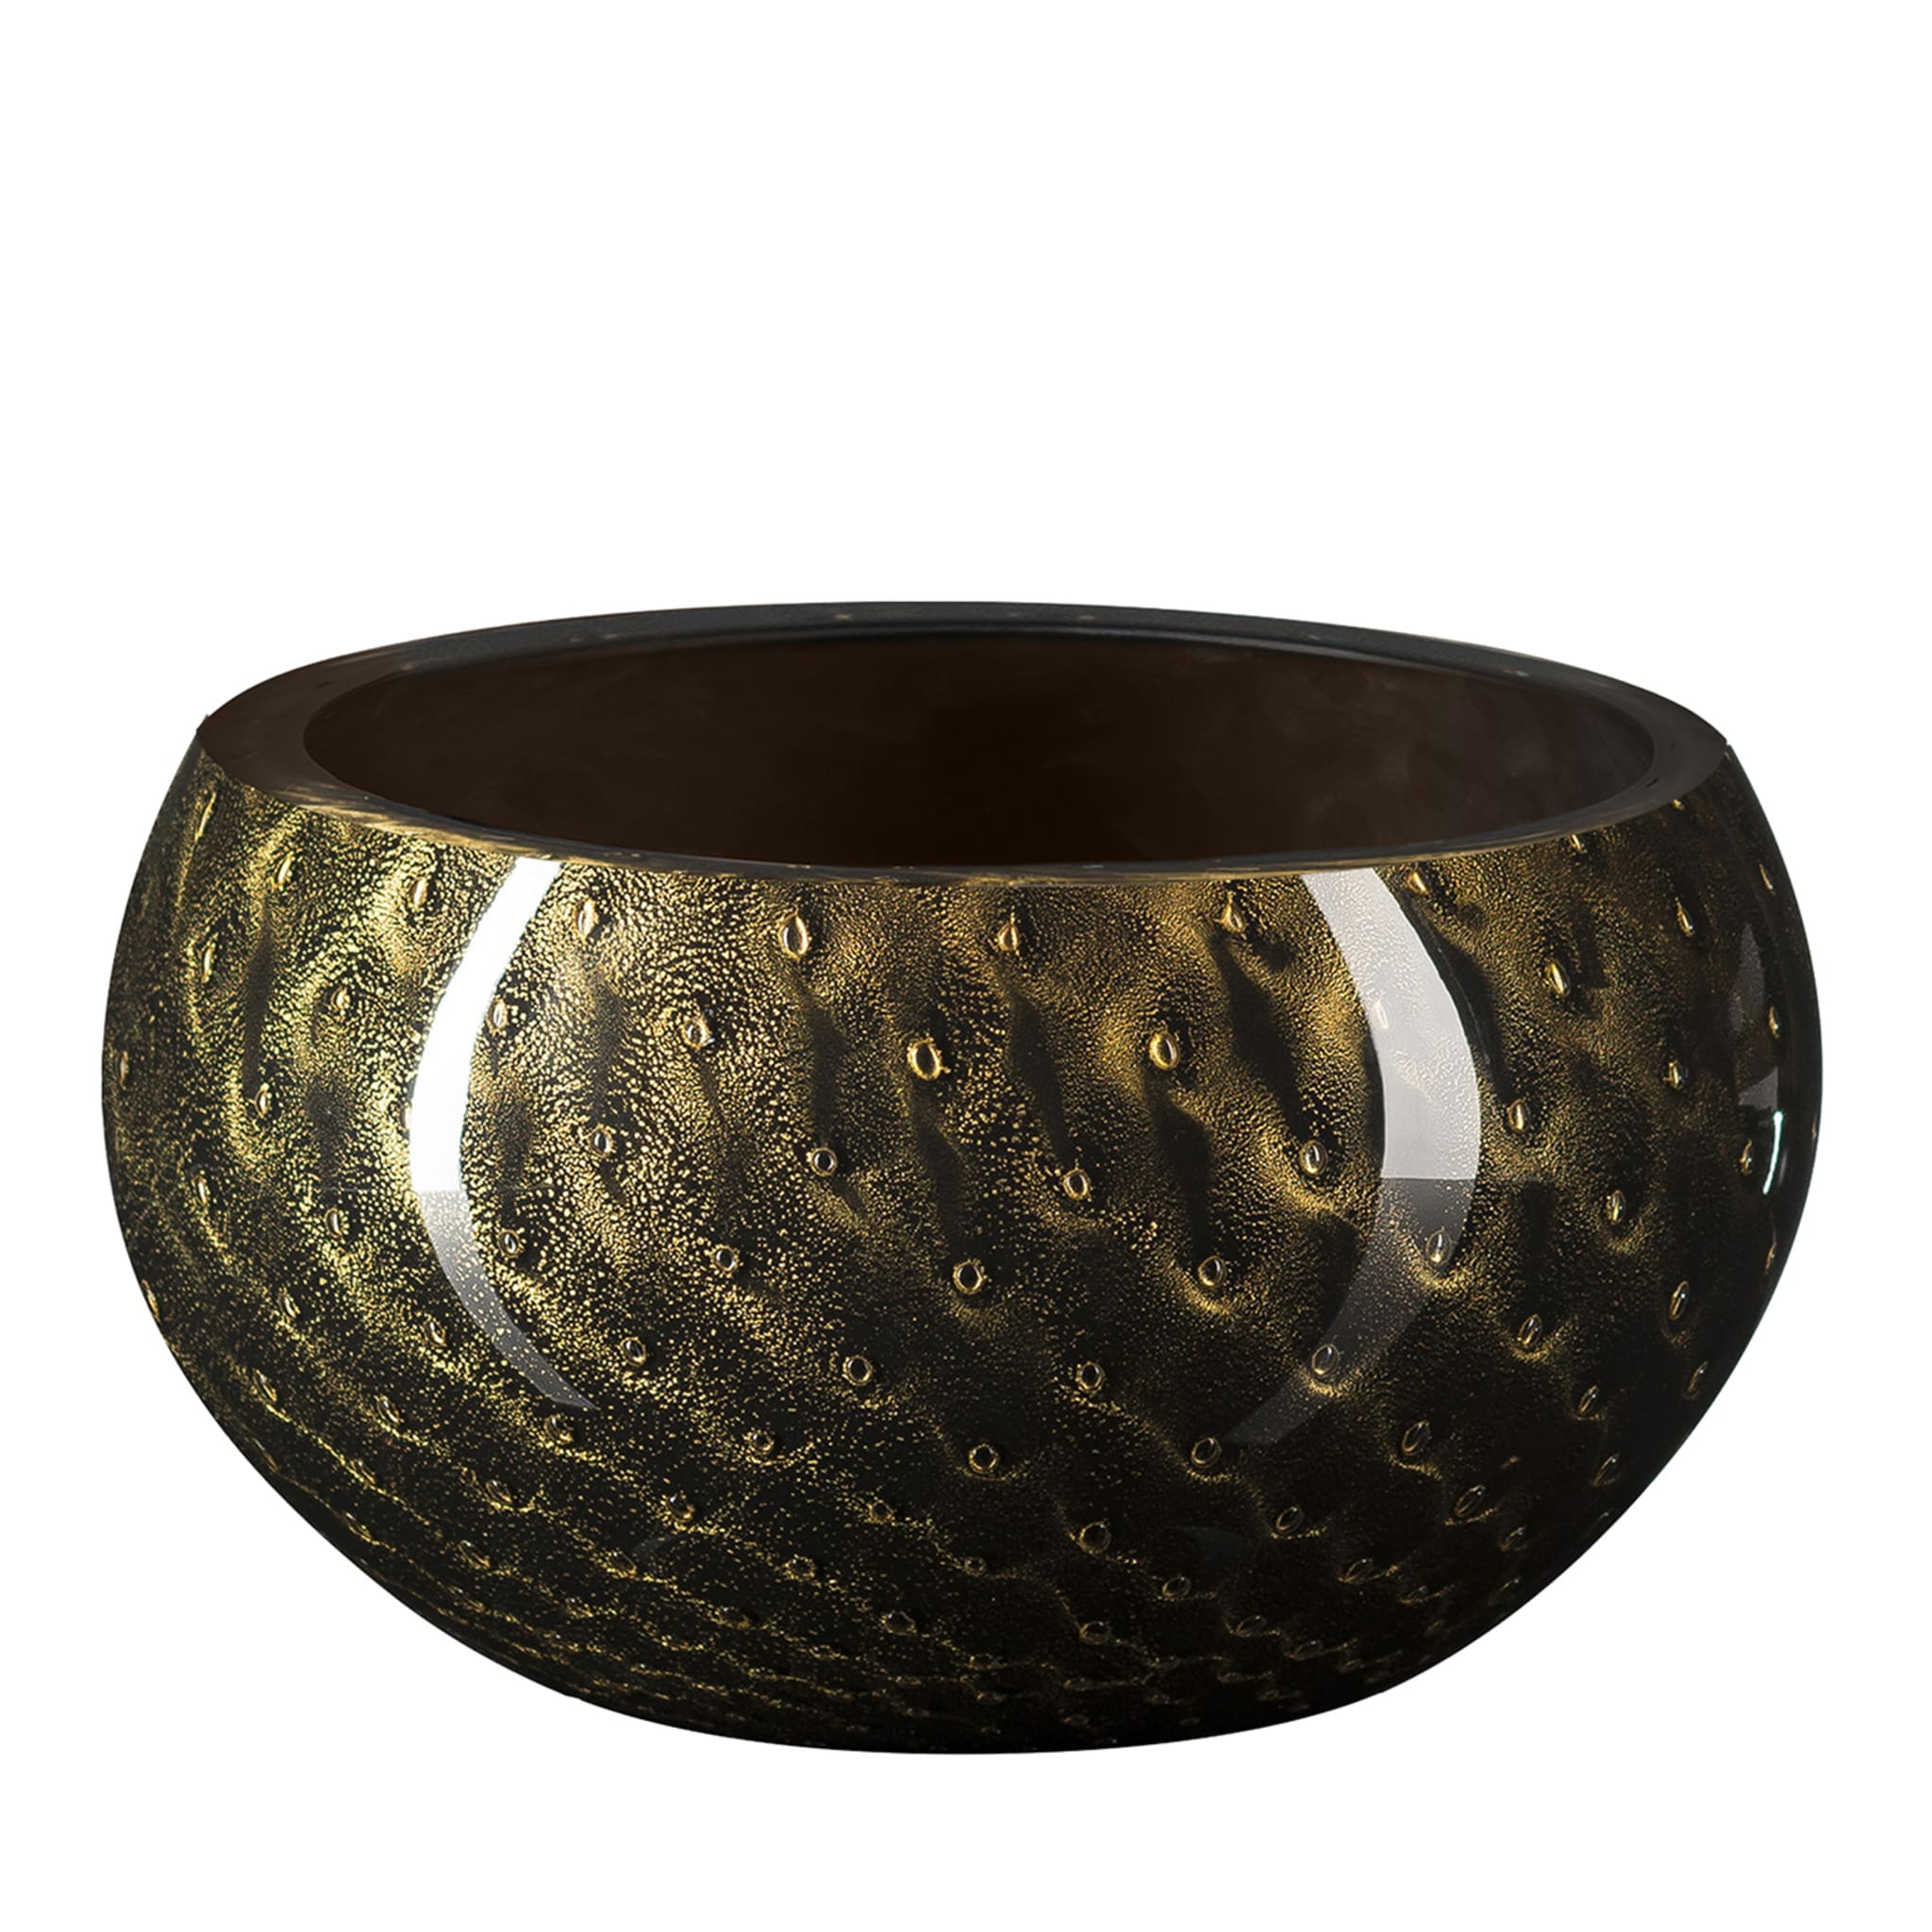 Mocenigo Gold & Black Decorative Bowl - Main view